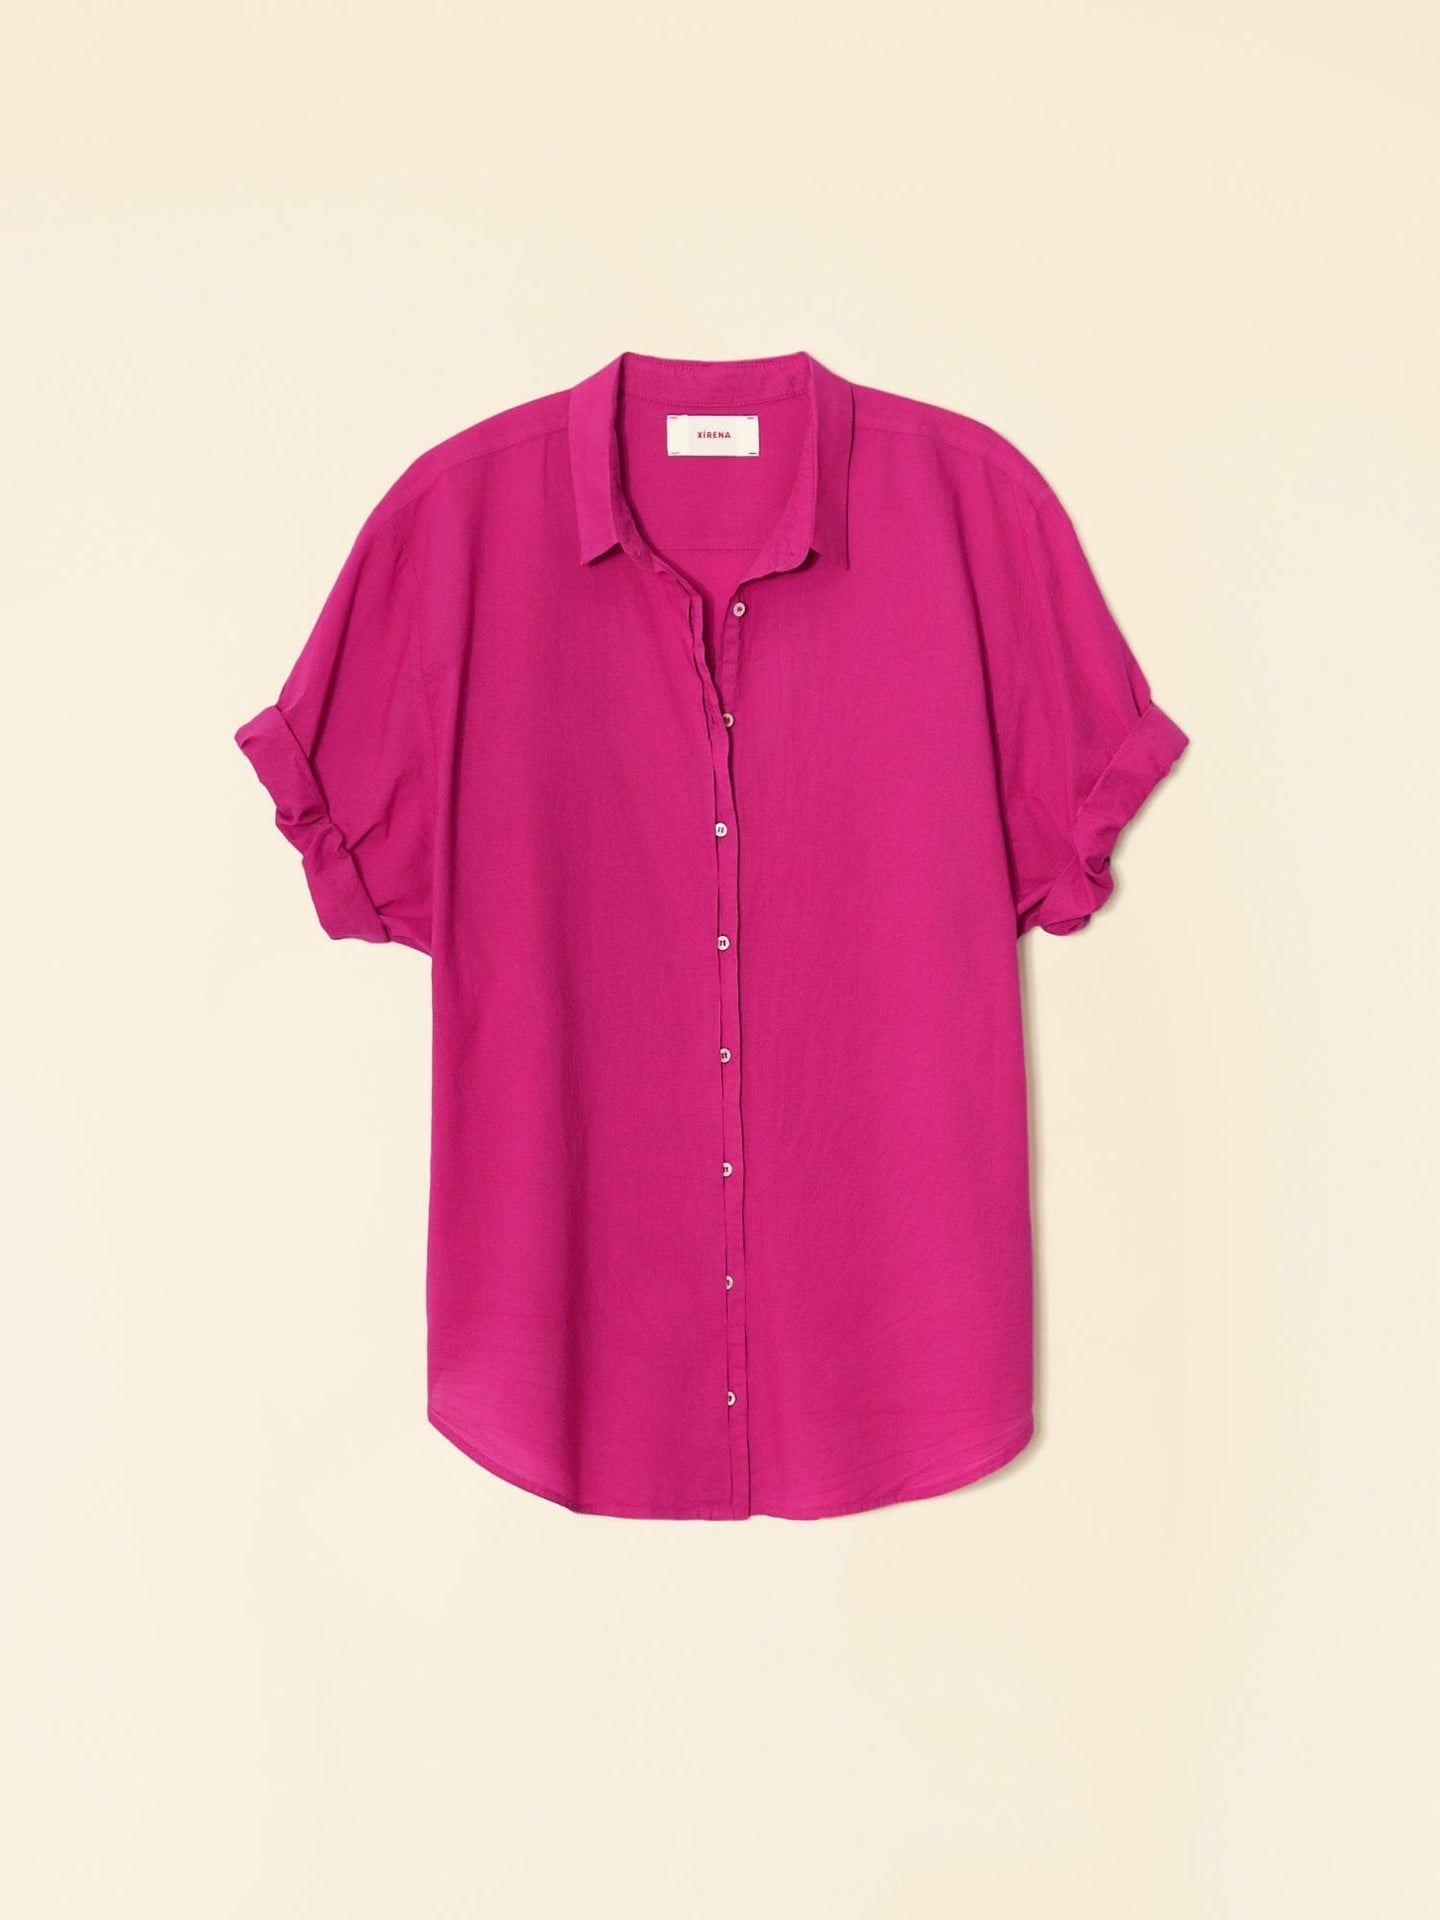 Shirt X5ctp114 Channing Shirt Pink-Plum